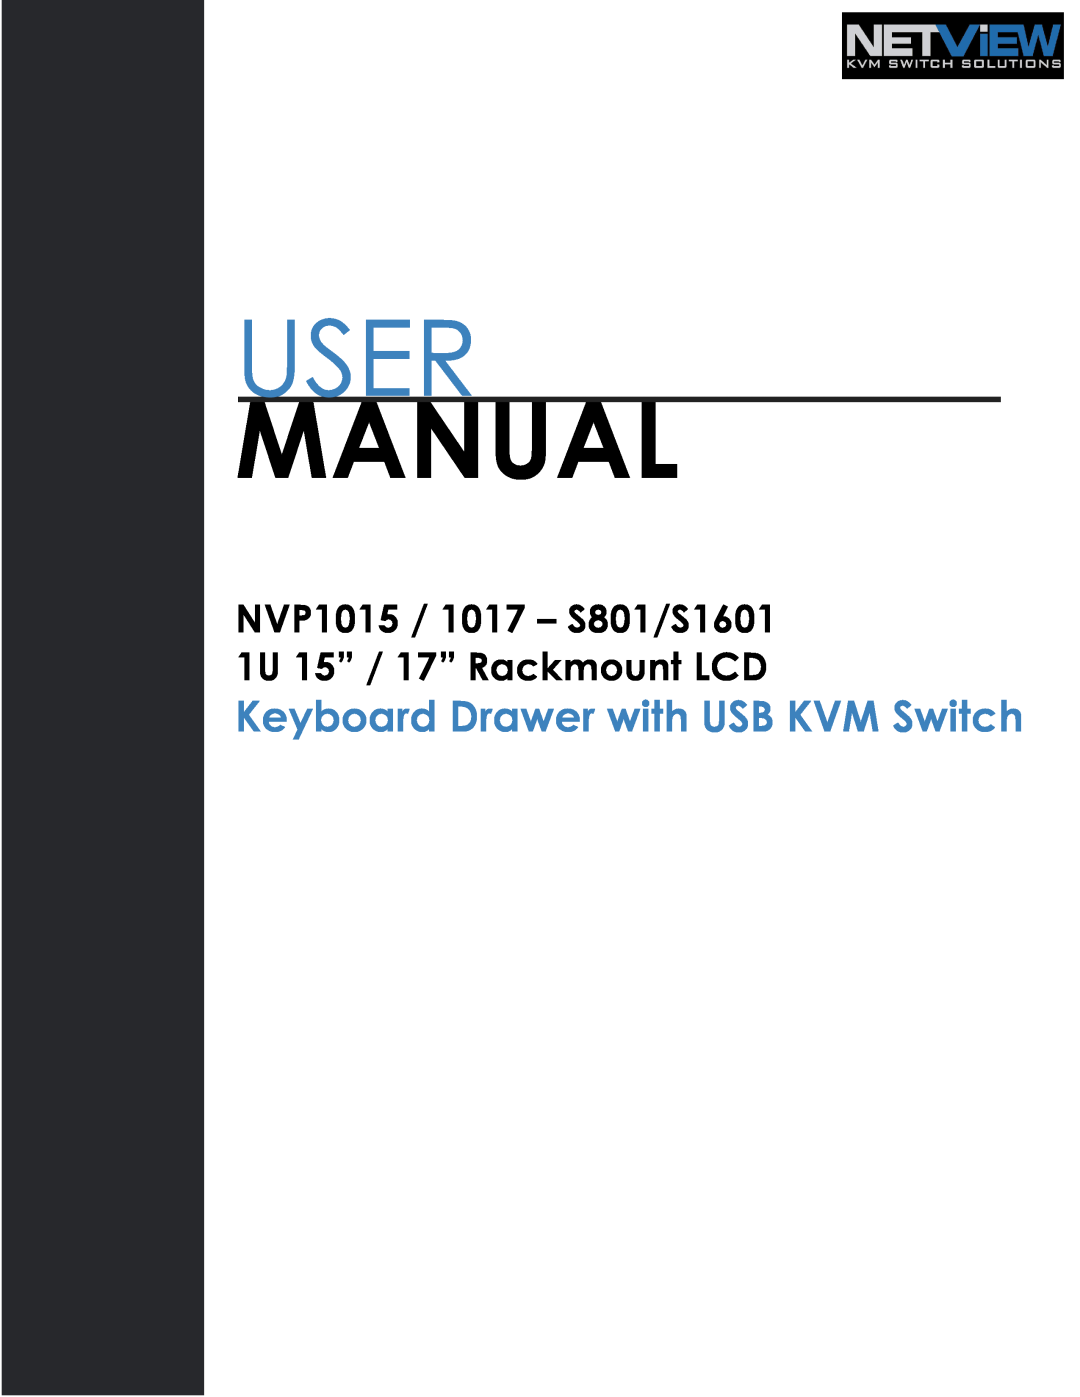 I-Tech Company NVP1015, NVP1017 manual User, Manual, Keyboard Drawer with USB KVM Switch 